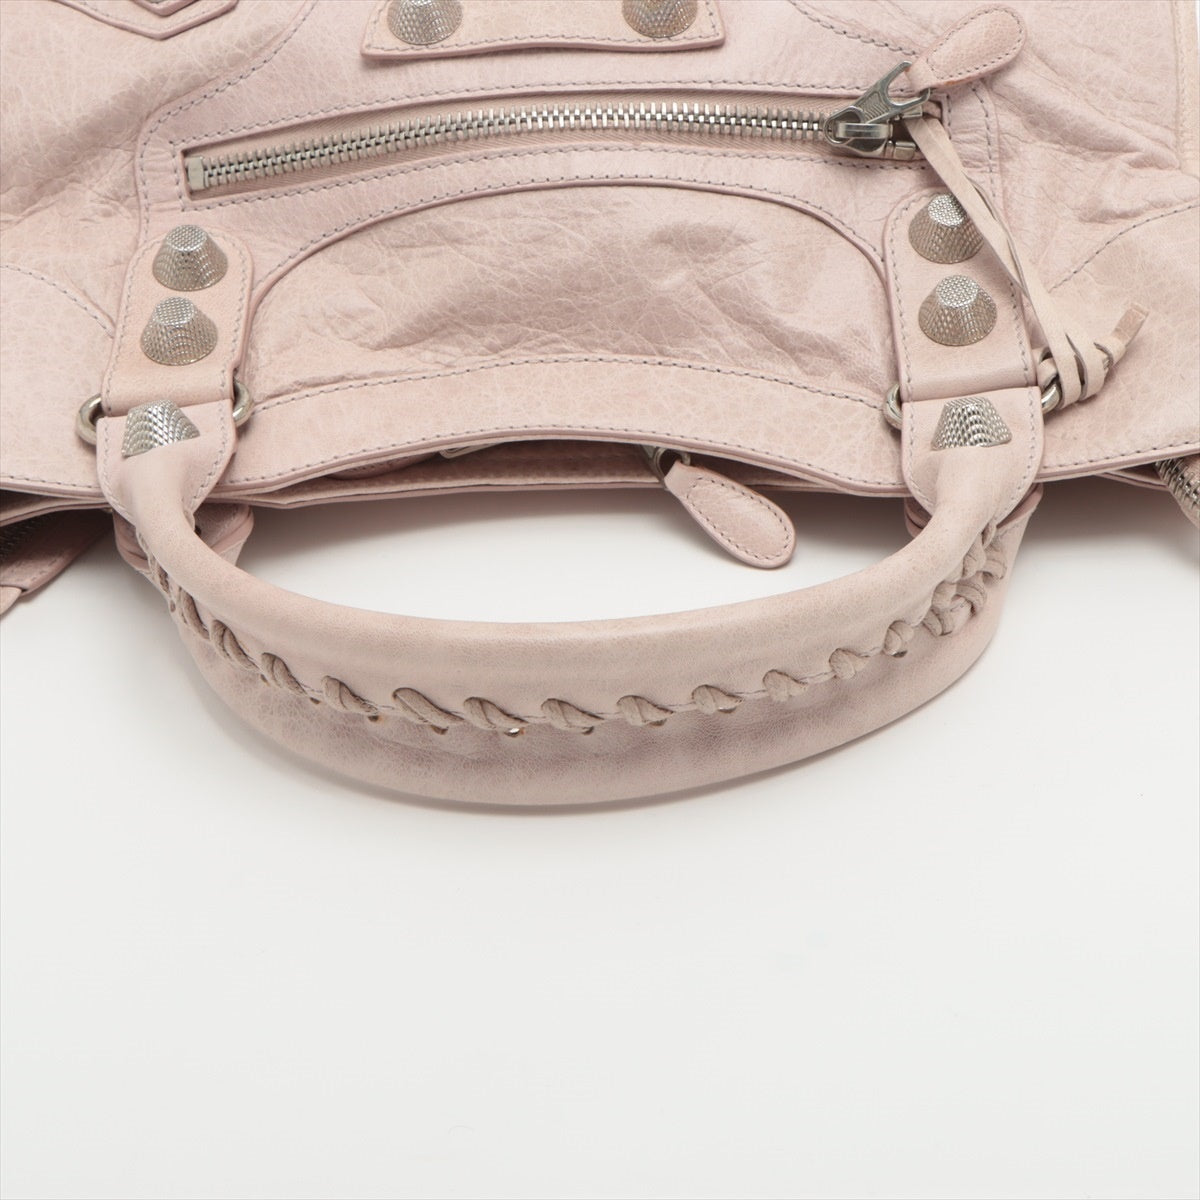 Balenciaga THE GIANTCITY Leather 2way handbag Pink 173084